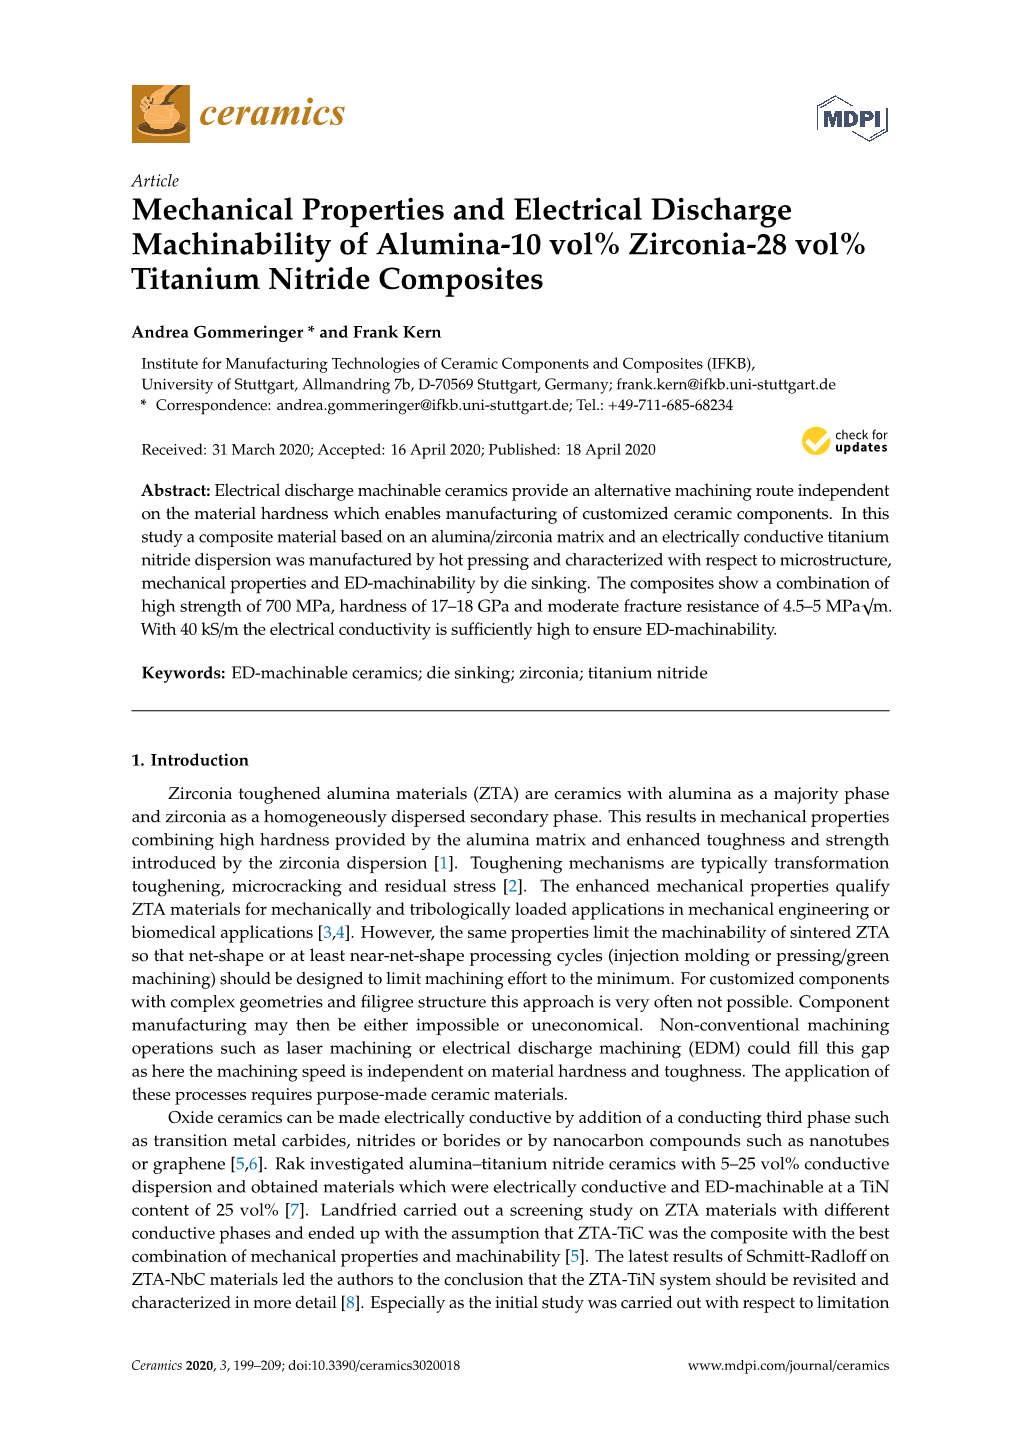 Mechanical Properties and Electrical Discharge Machinability of Alumina-10 Vol% Zirconia-28 Vol% Titanium Nitride Composites